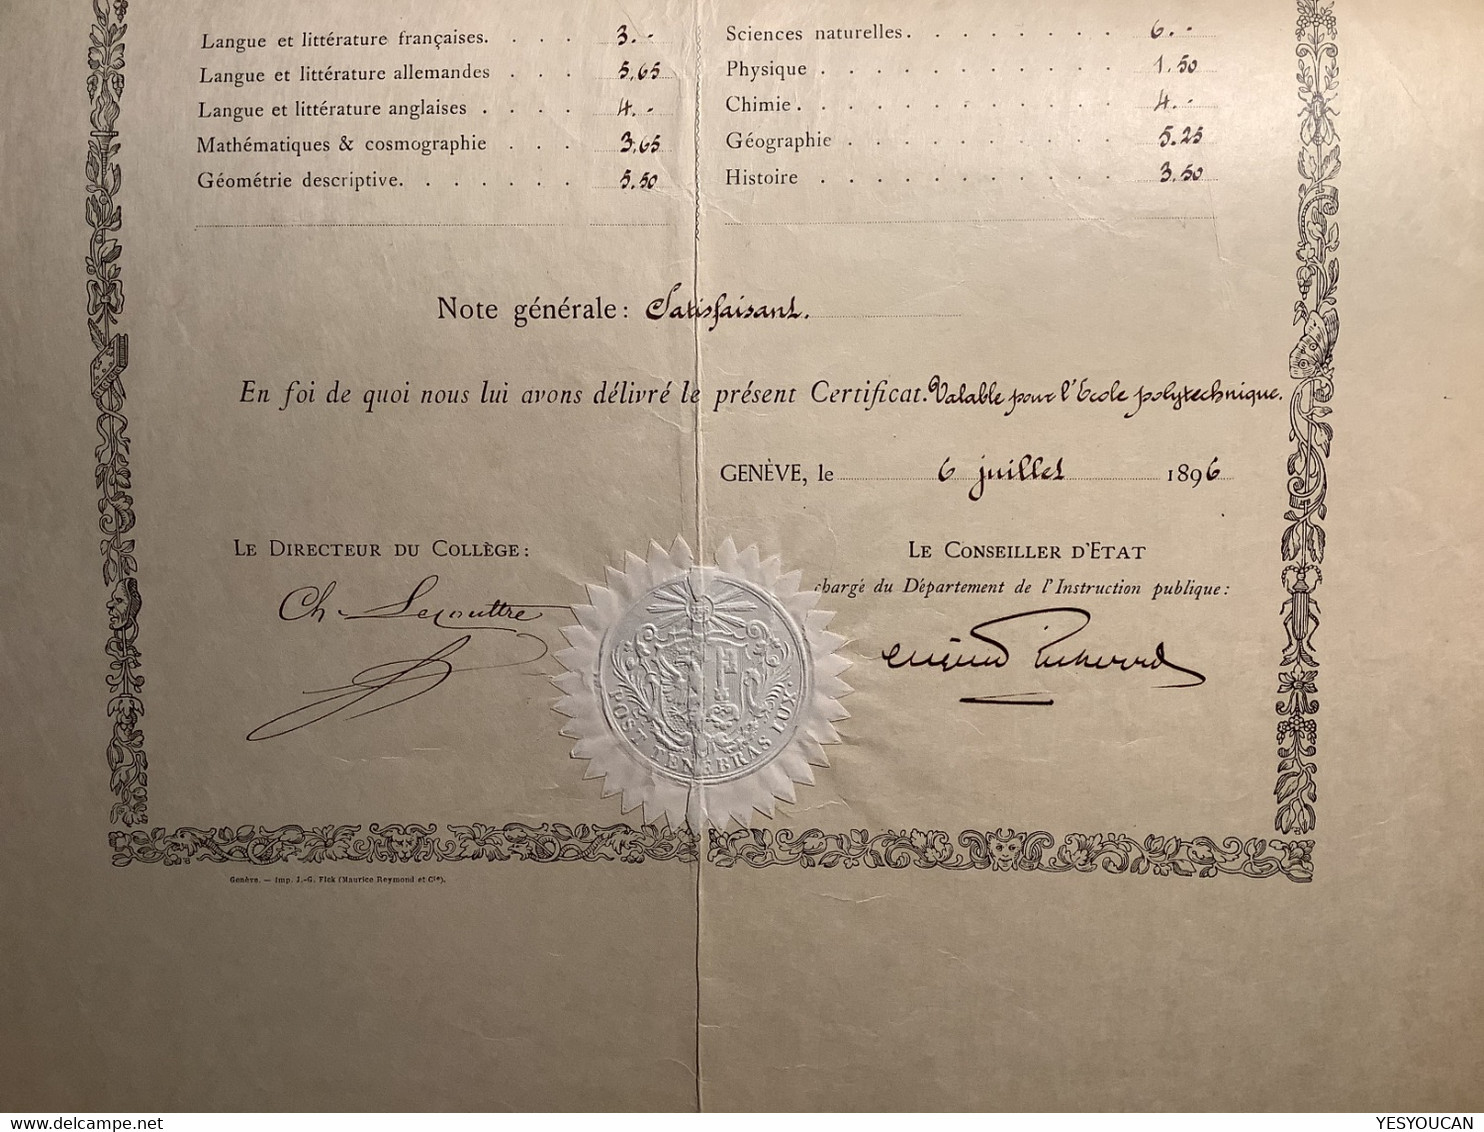 Certificat Collège De Genève 1896: Eugéne Wenger (Schweiz Suisse Scolaire School Schule Diplome Diploma Diplom - Diplome Und Schulzeugnisse